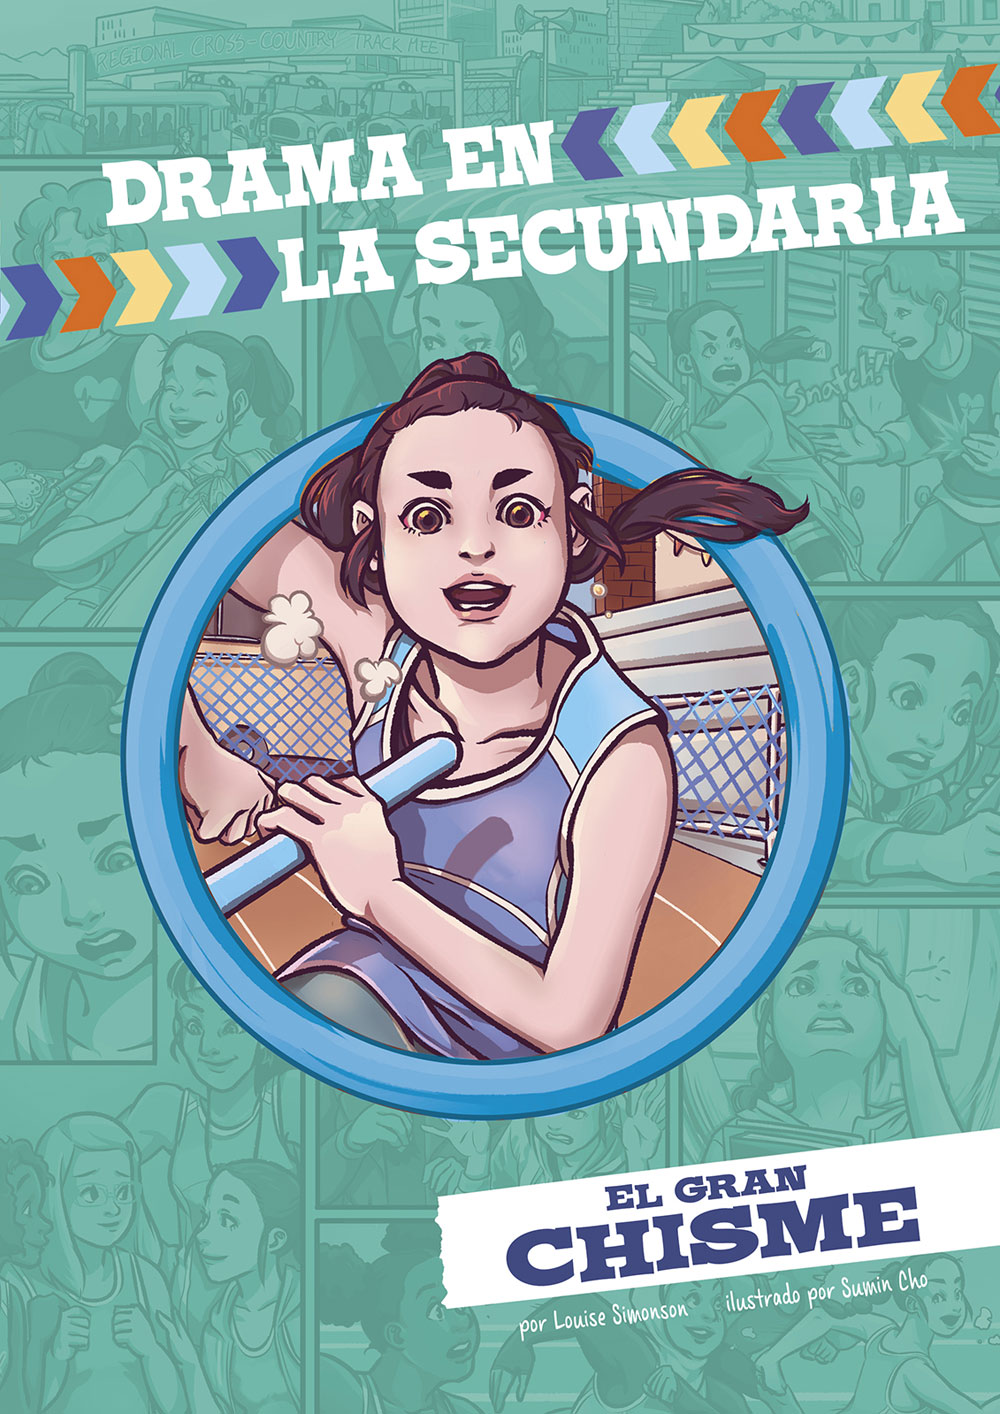 Drama en la secundaria: El gran chisme Spanish Level 4+ Graphic Reader